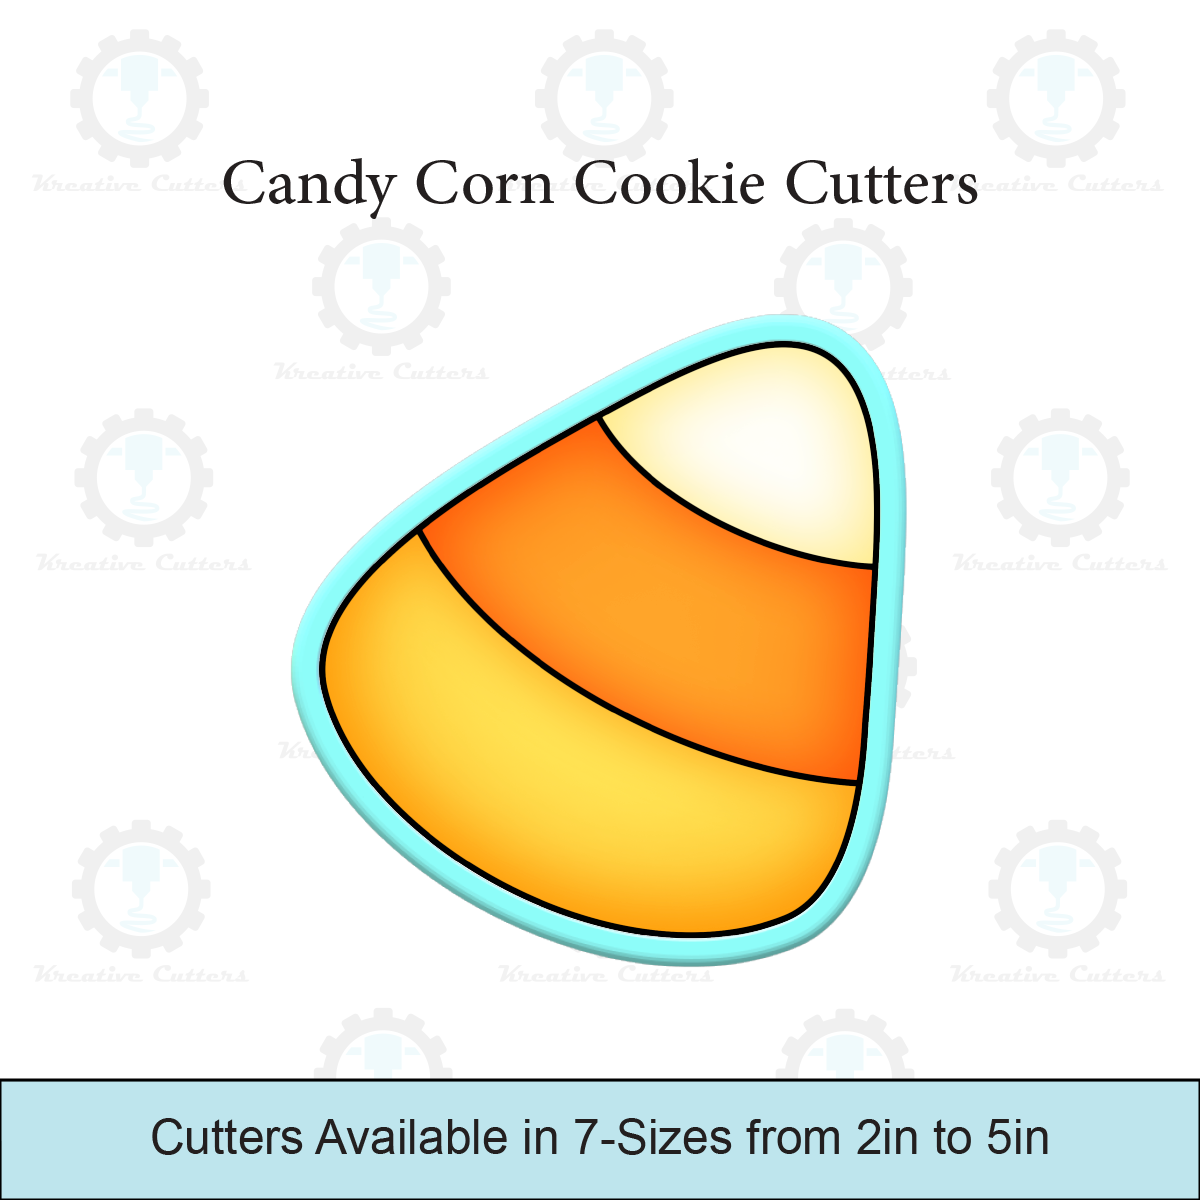 Candy Corn Cookie Cutters